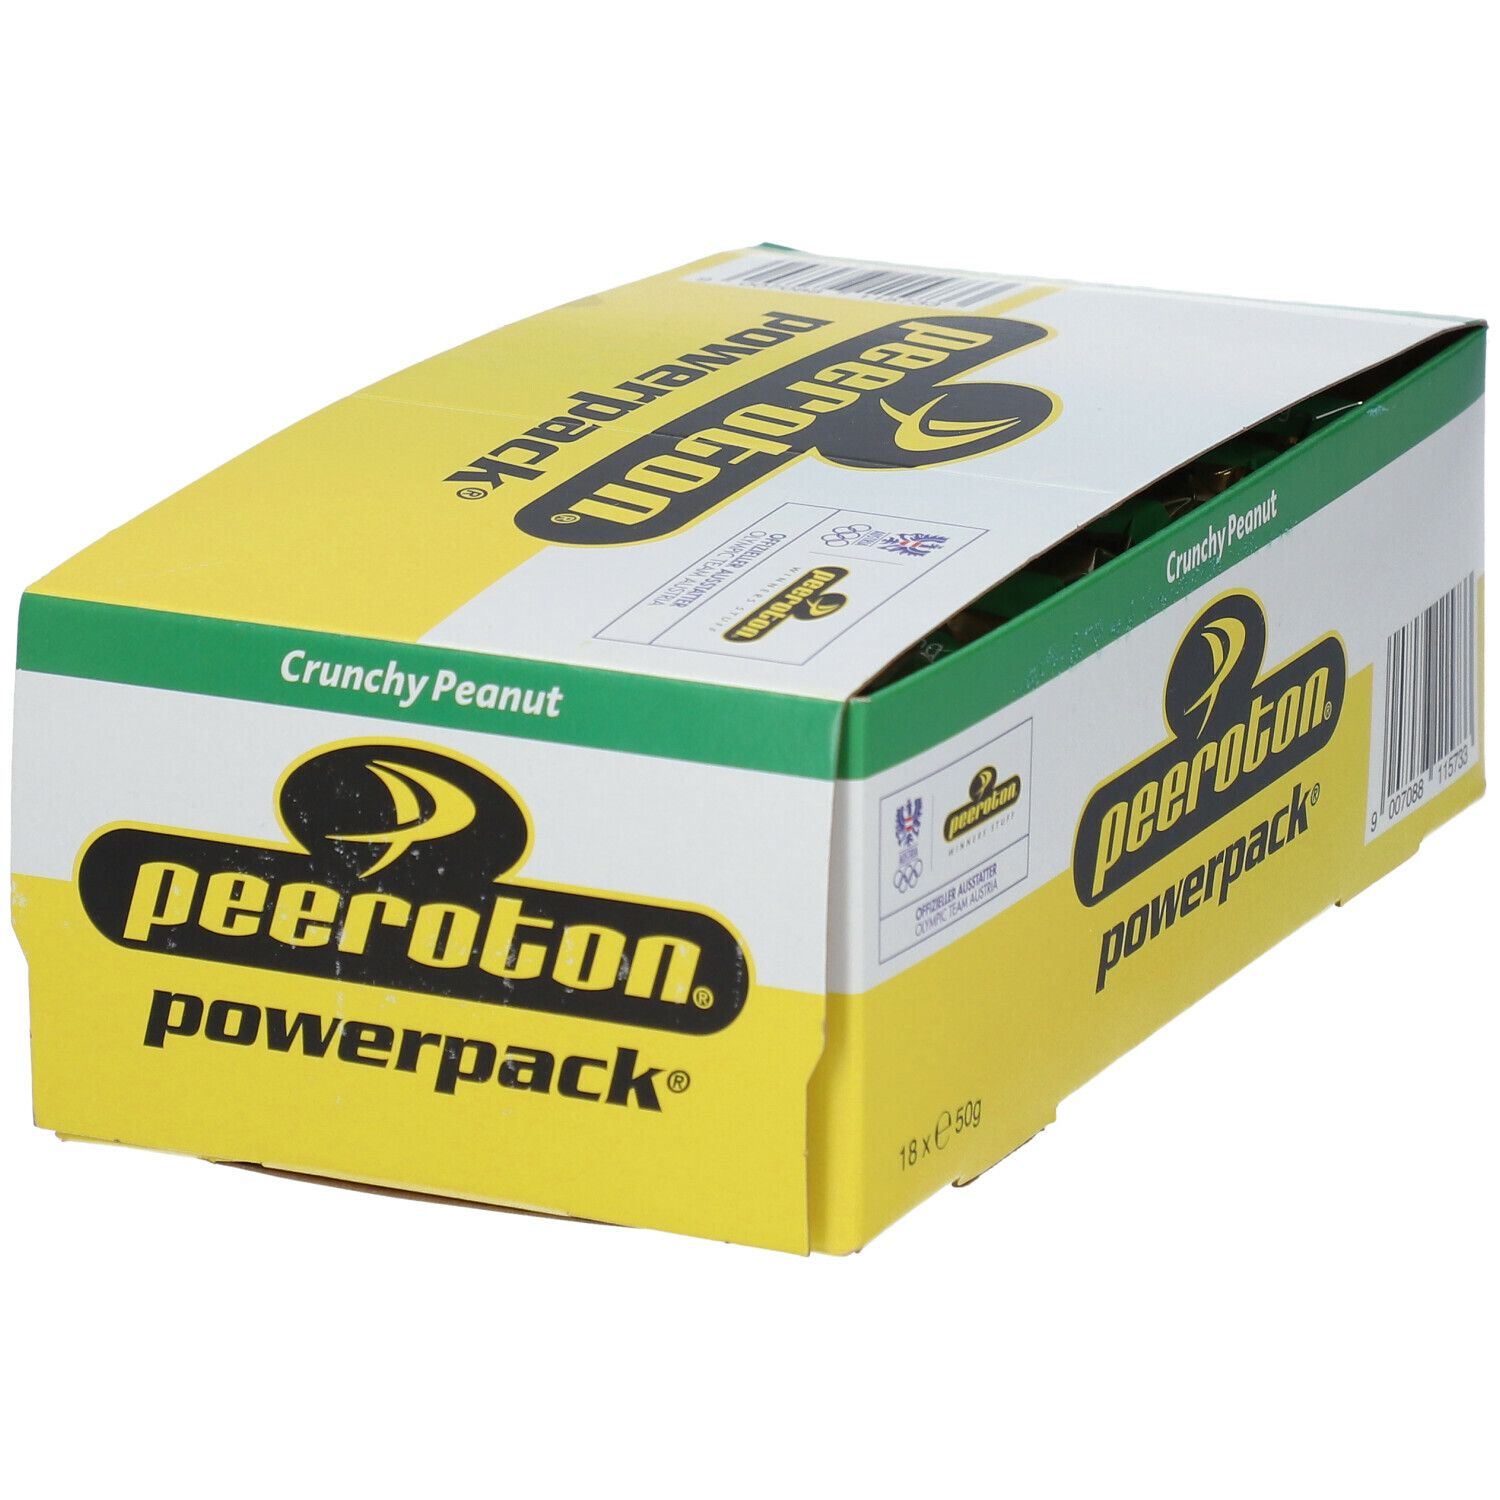 peeroton® Powerpack Riegel Crunchy Peanut